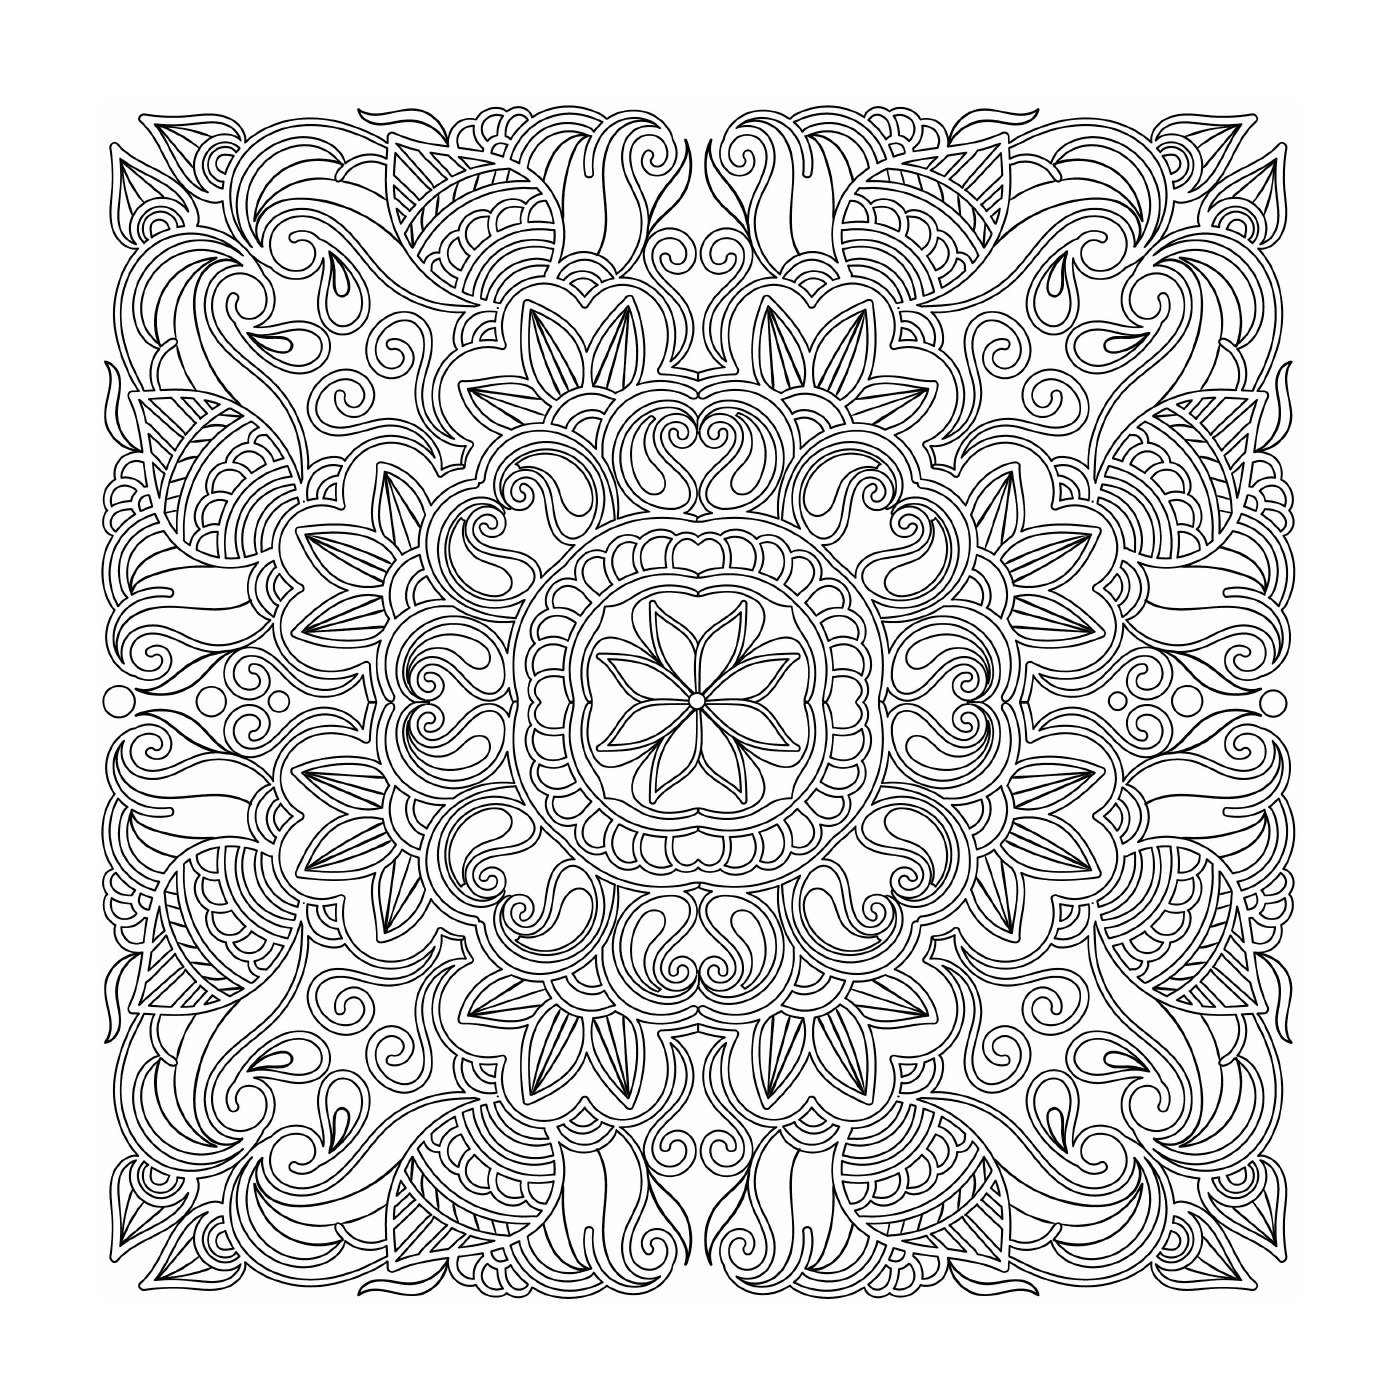   Mandala - Doodle complexe 